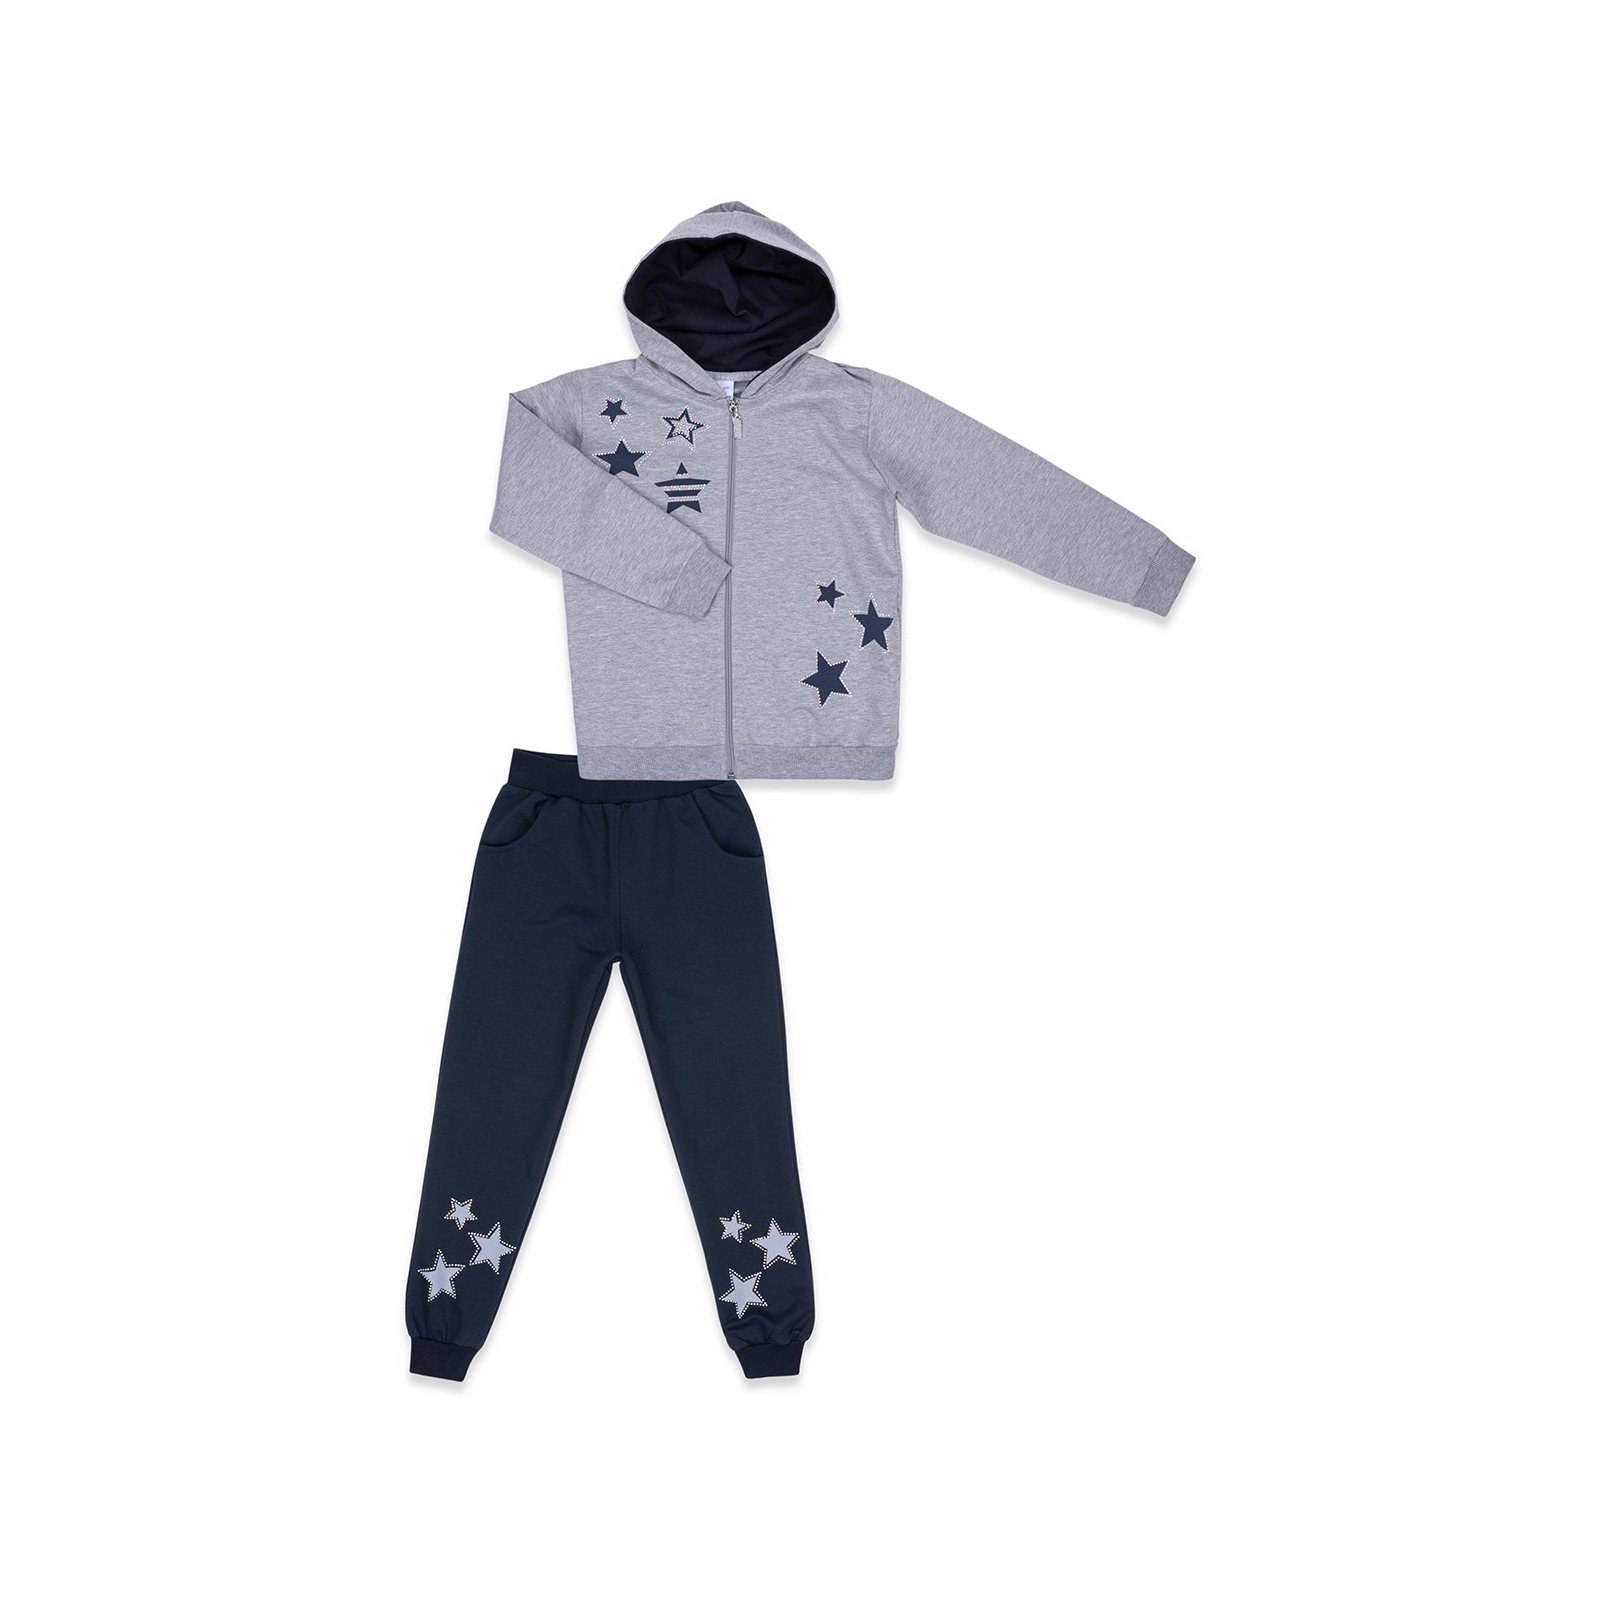 Спортивный костюм Breeze со звездами (9712-140G-gray)